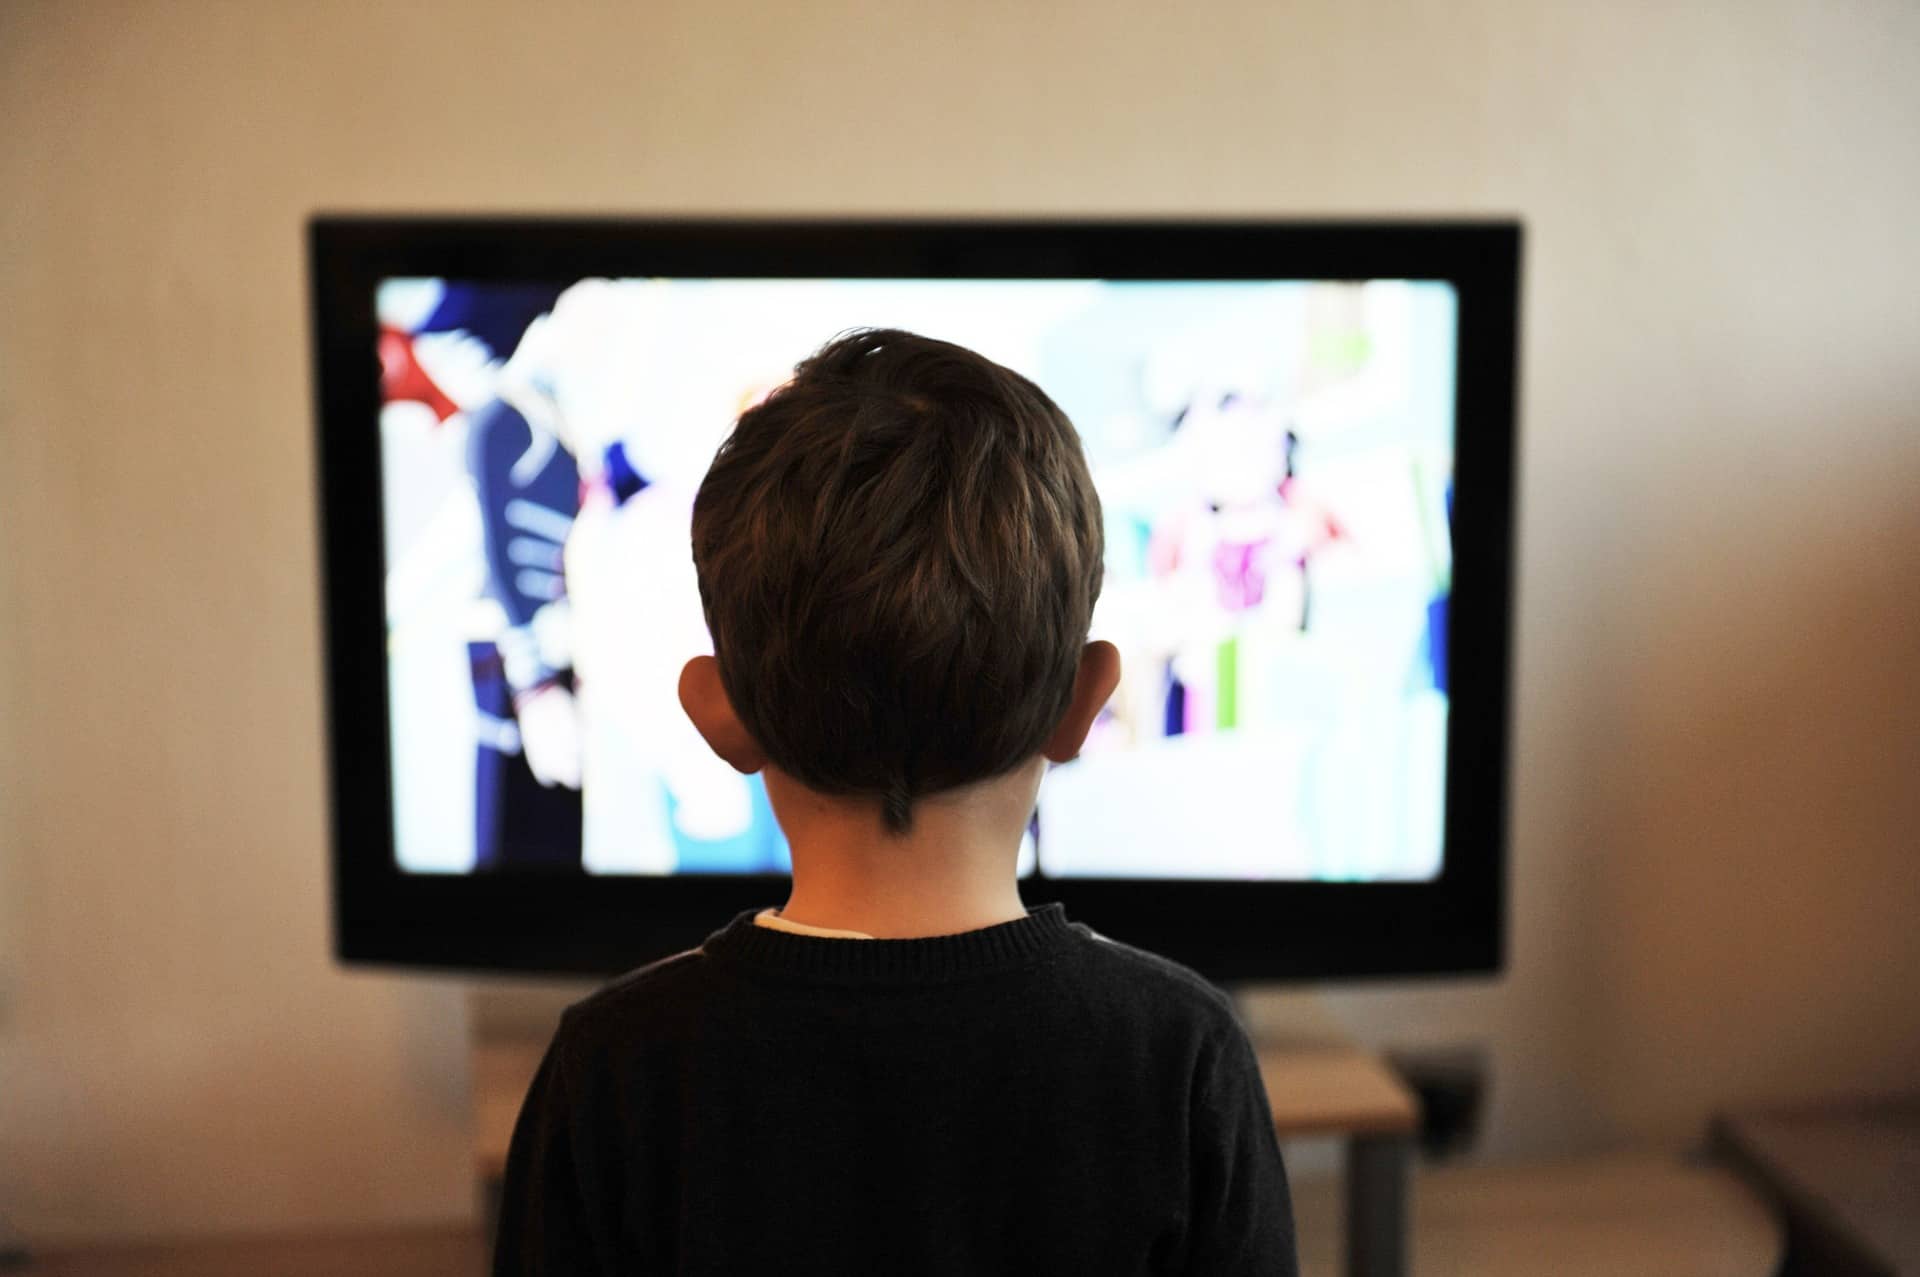 A young boy watching TV